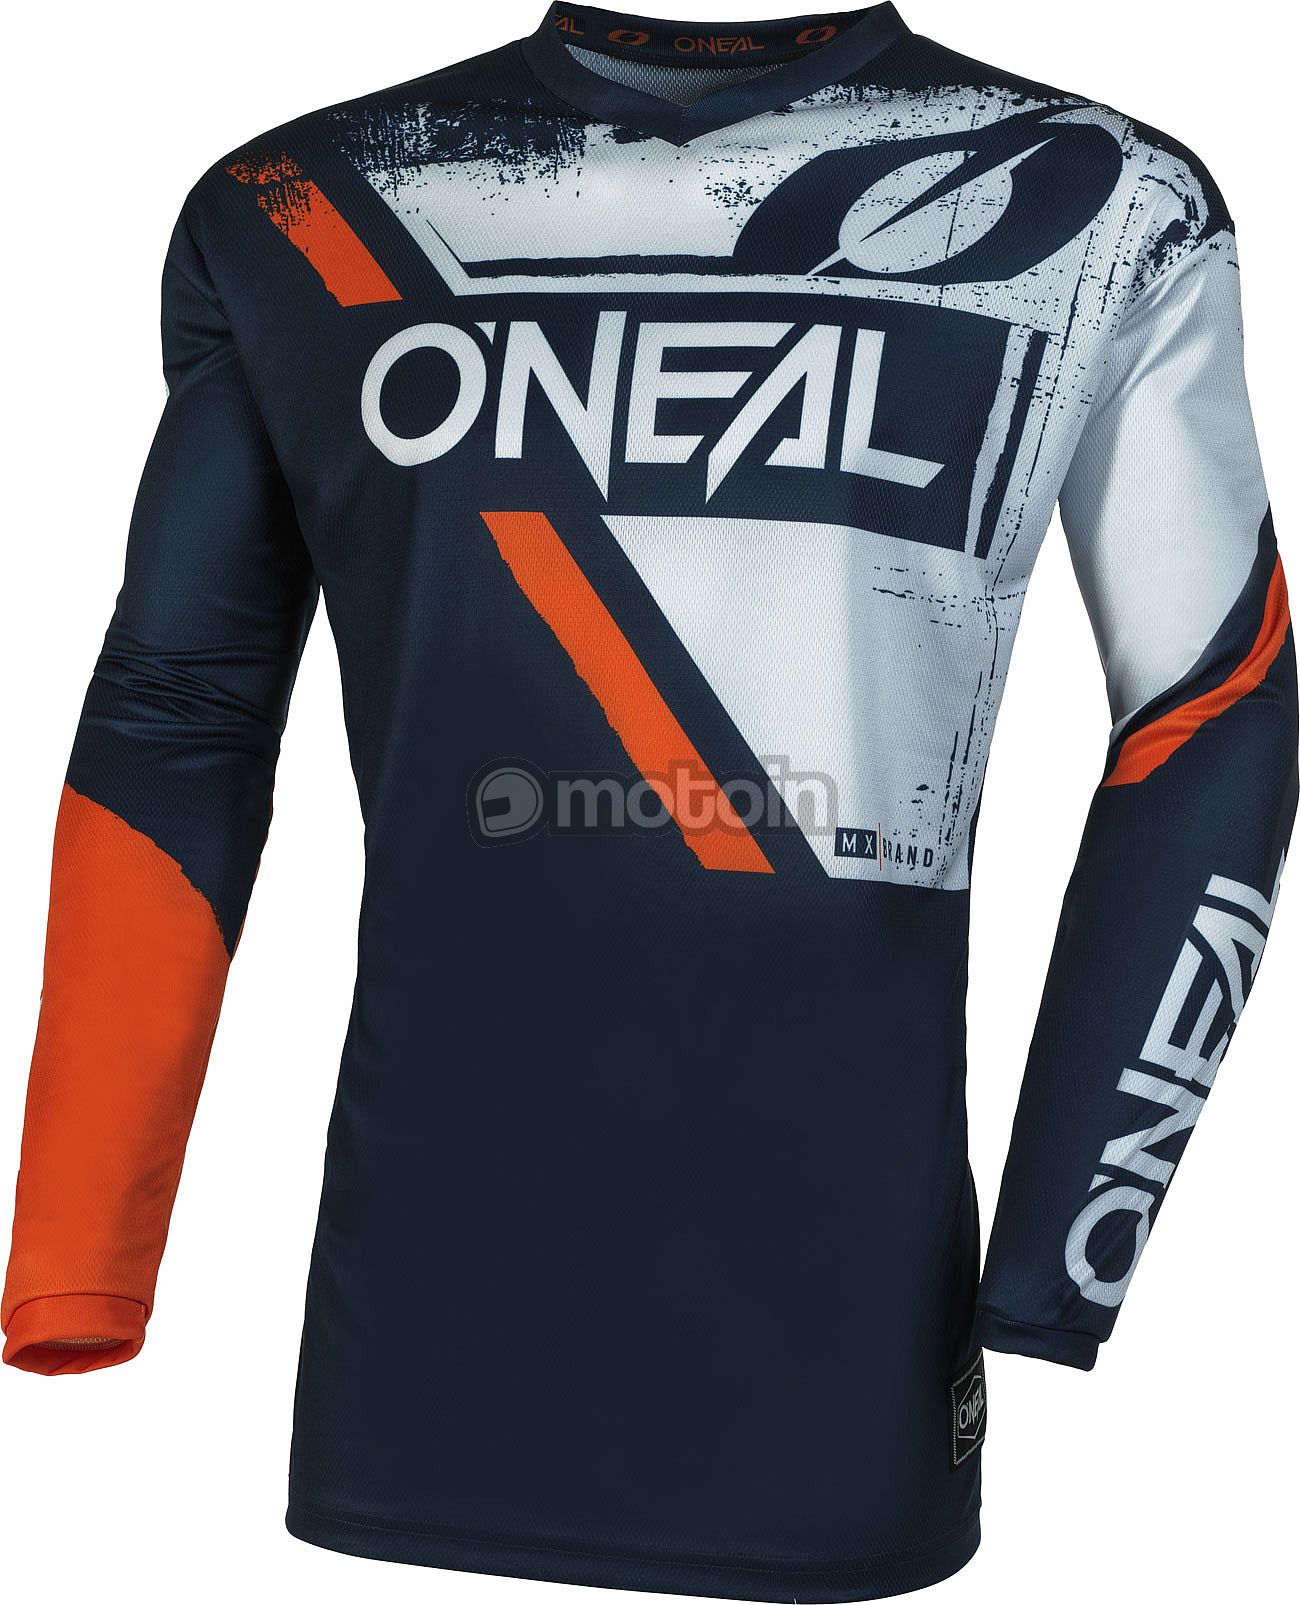 ONeal Element Shocker S23, jersey - motoin.de